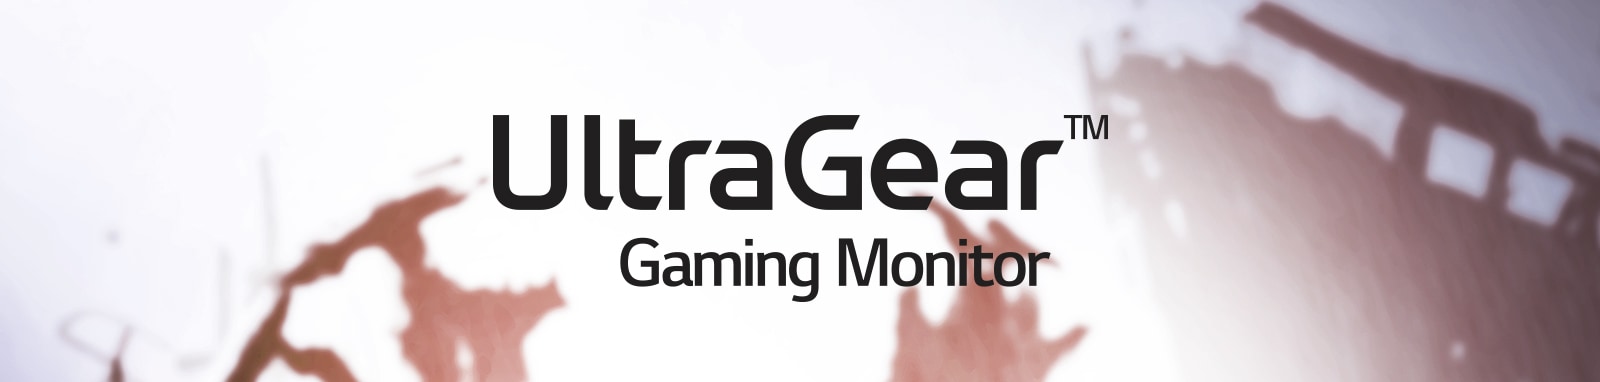 MNT-UltraGear-24GL600F-01-UltraGear-Desktop1